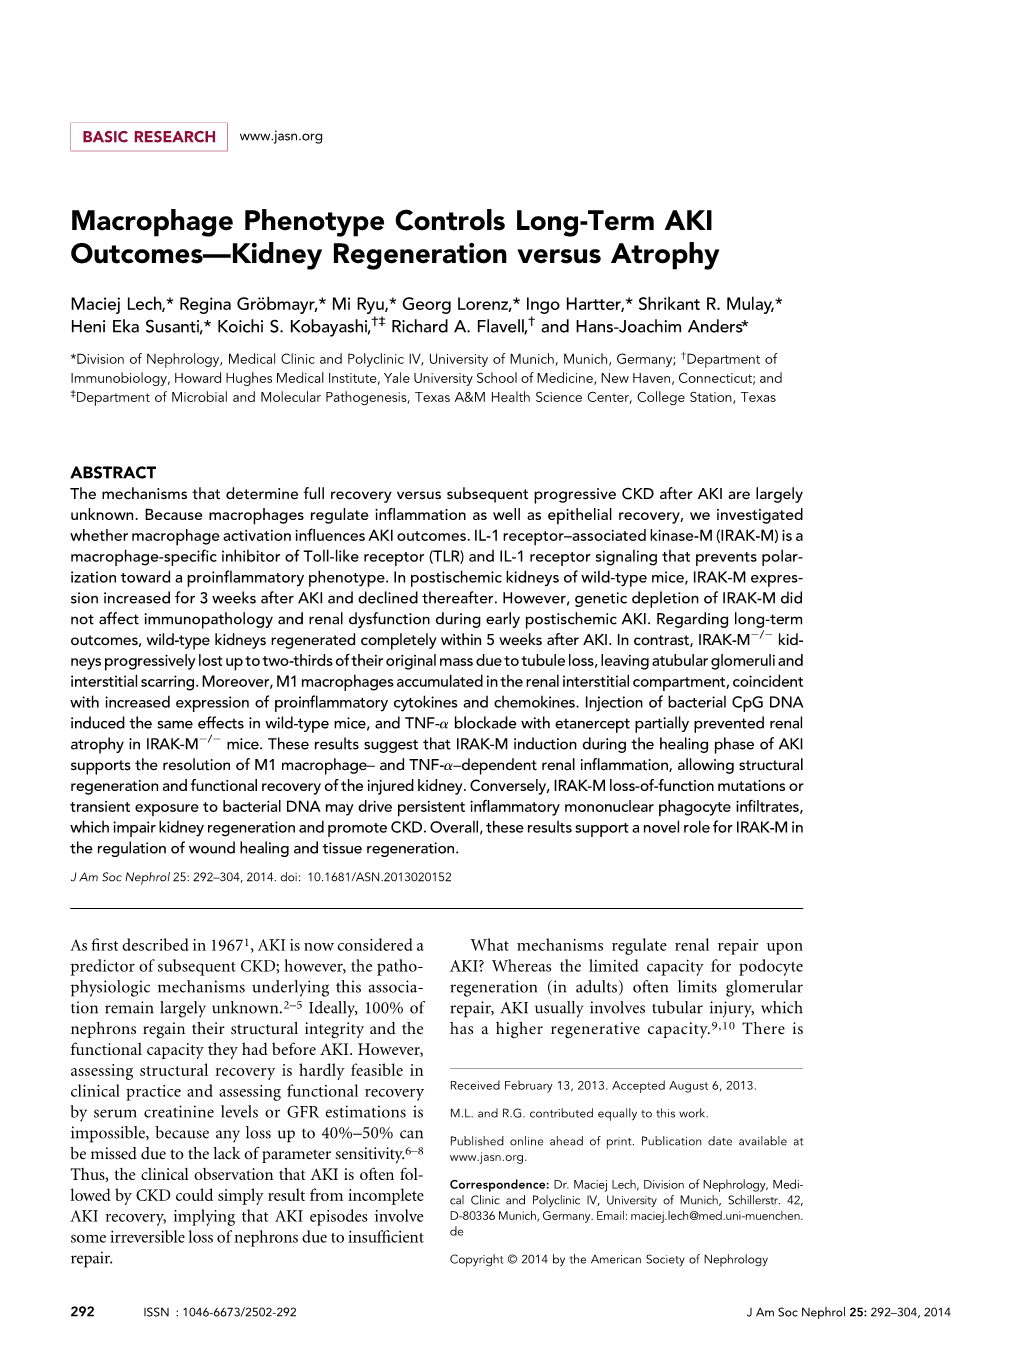 Macrophage Phenotype Controls Long-Term AKI Outcomes—Kidney Regeneration Versus Atrophy